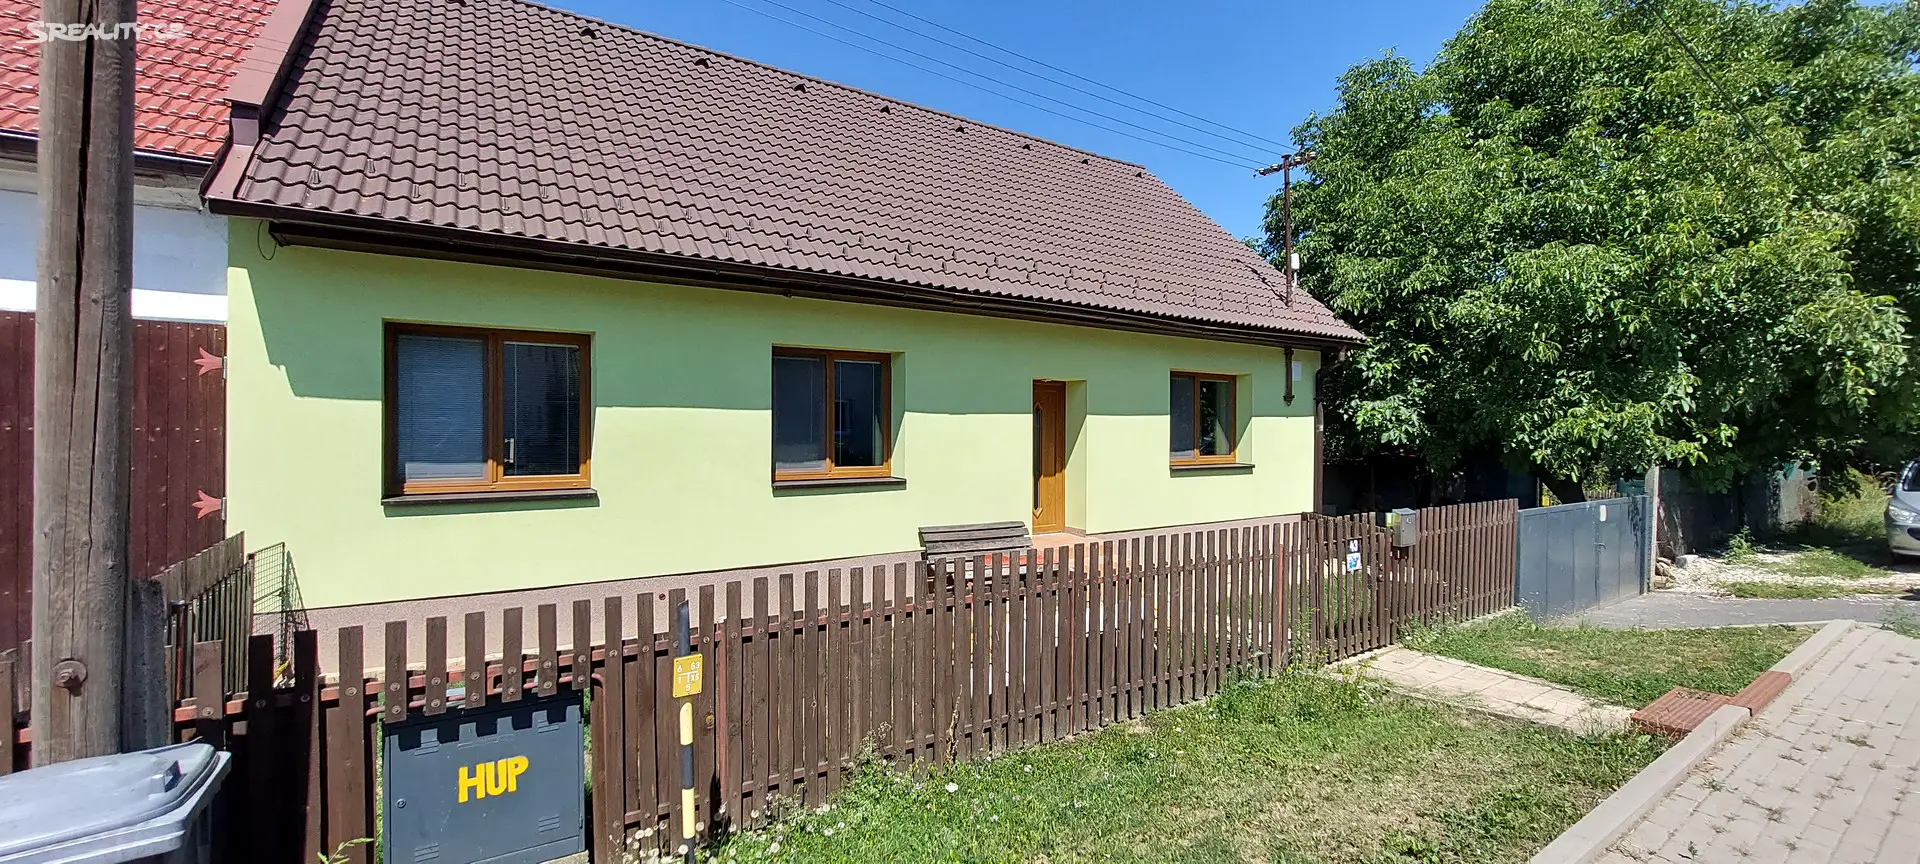 Prodej  rodinného domu 91 m², pozemek 415 m², Luhačovice - Polichno, okres Zlín